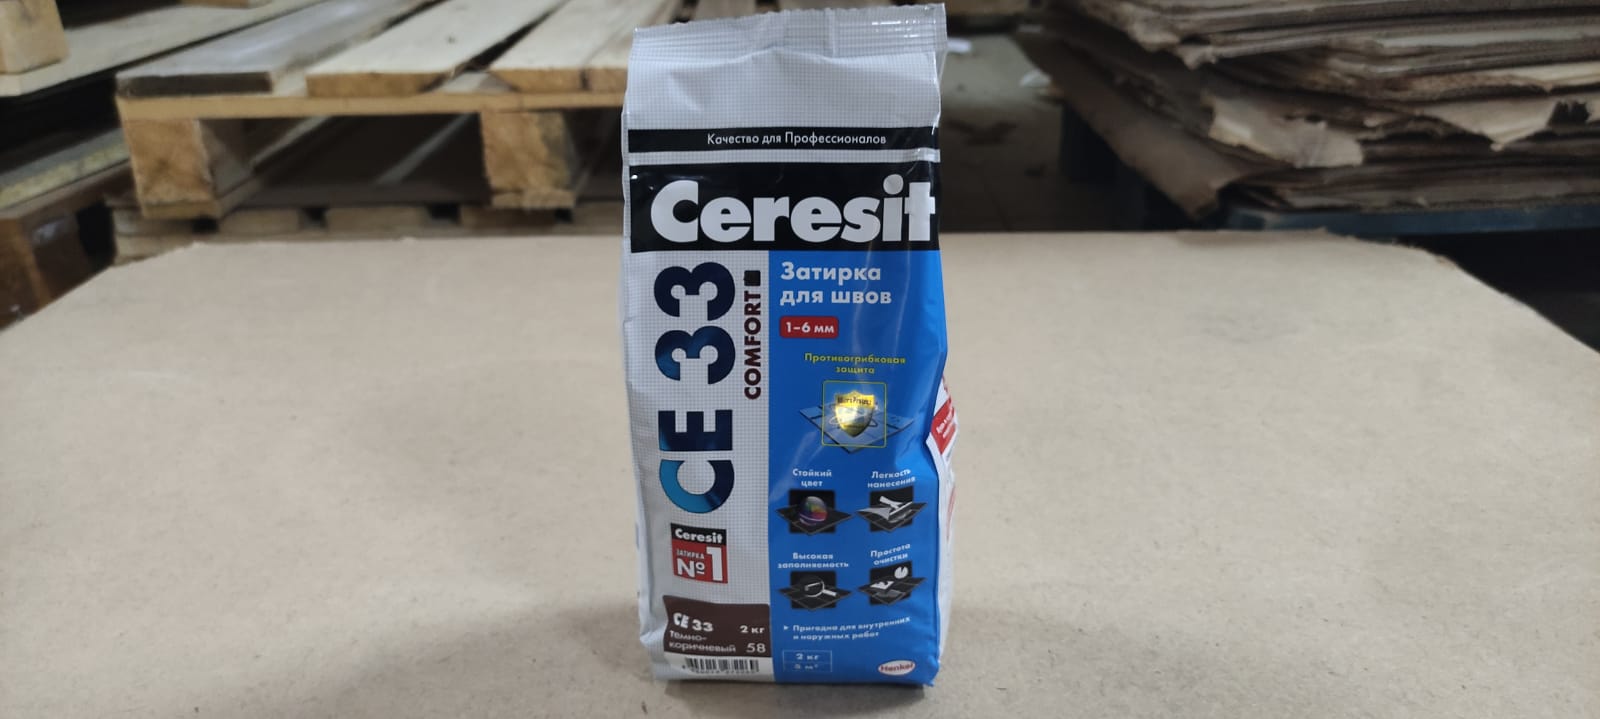 Затирка для швов 1-6 мм Ceresit / Церезит СЕ 33 Comfort 2 кг (цвет: Темно-коричневый)								